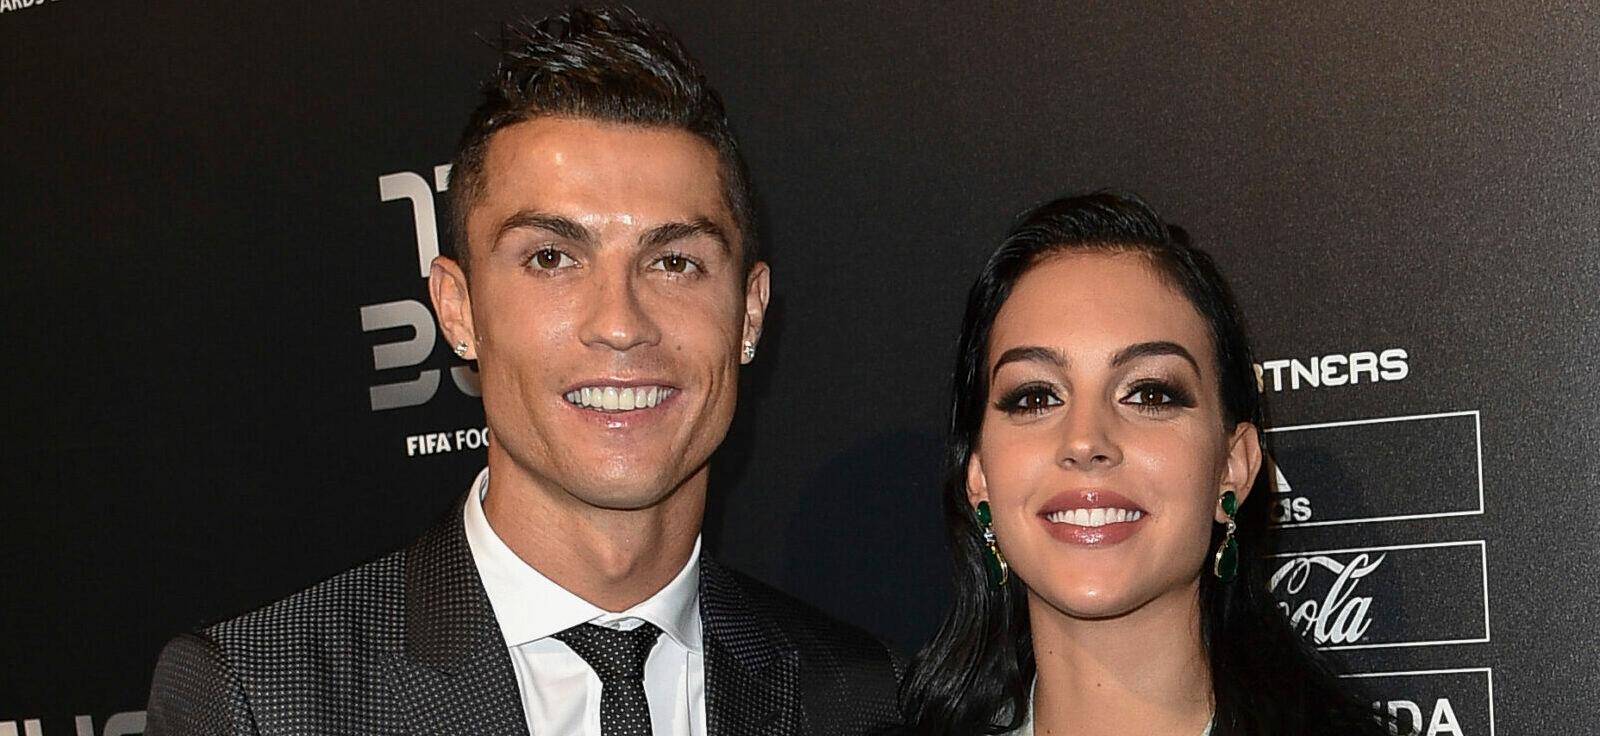 Georgina Rodriguez Reminisces Meeting ‘Love Of Her Life’ Cristiano Ronaldo At 22